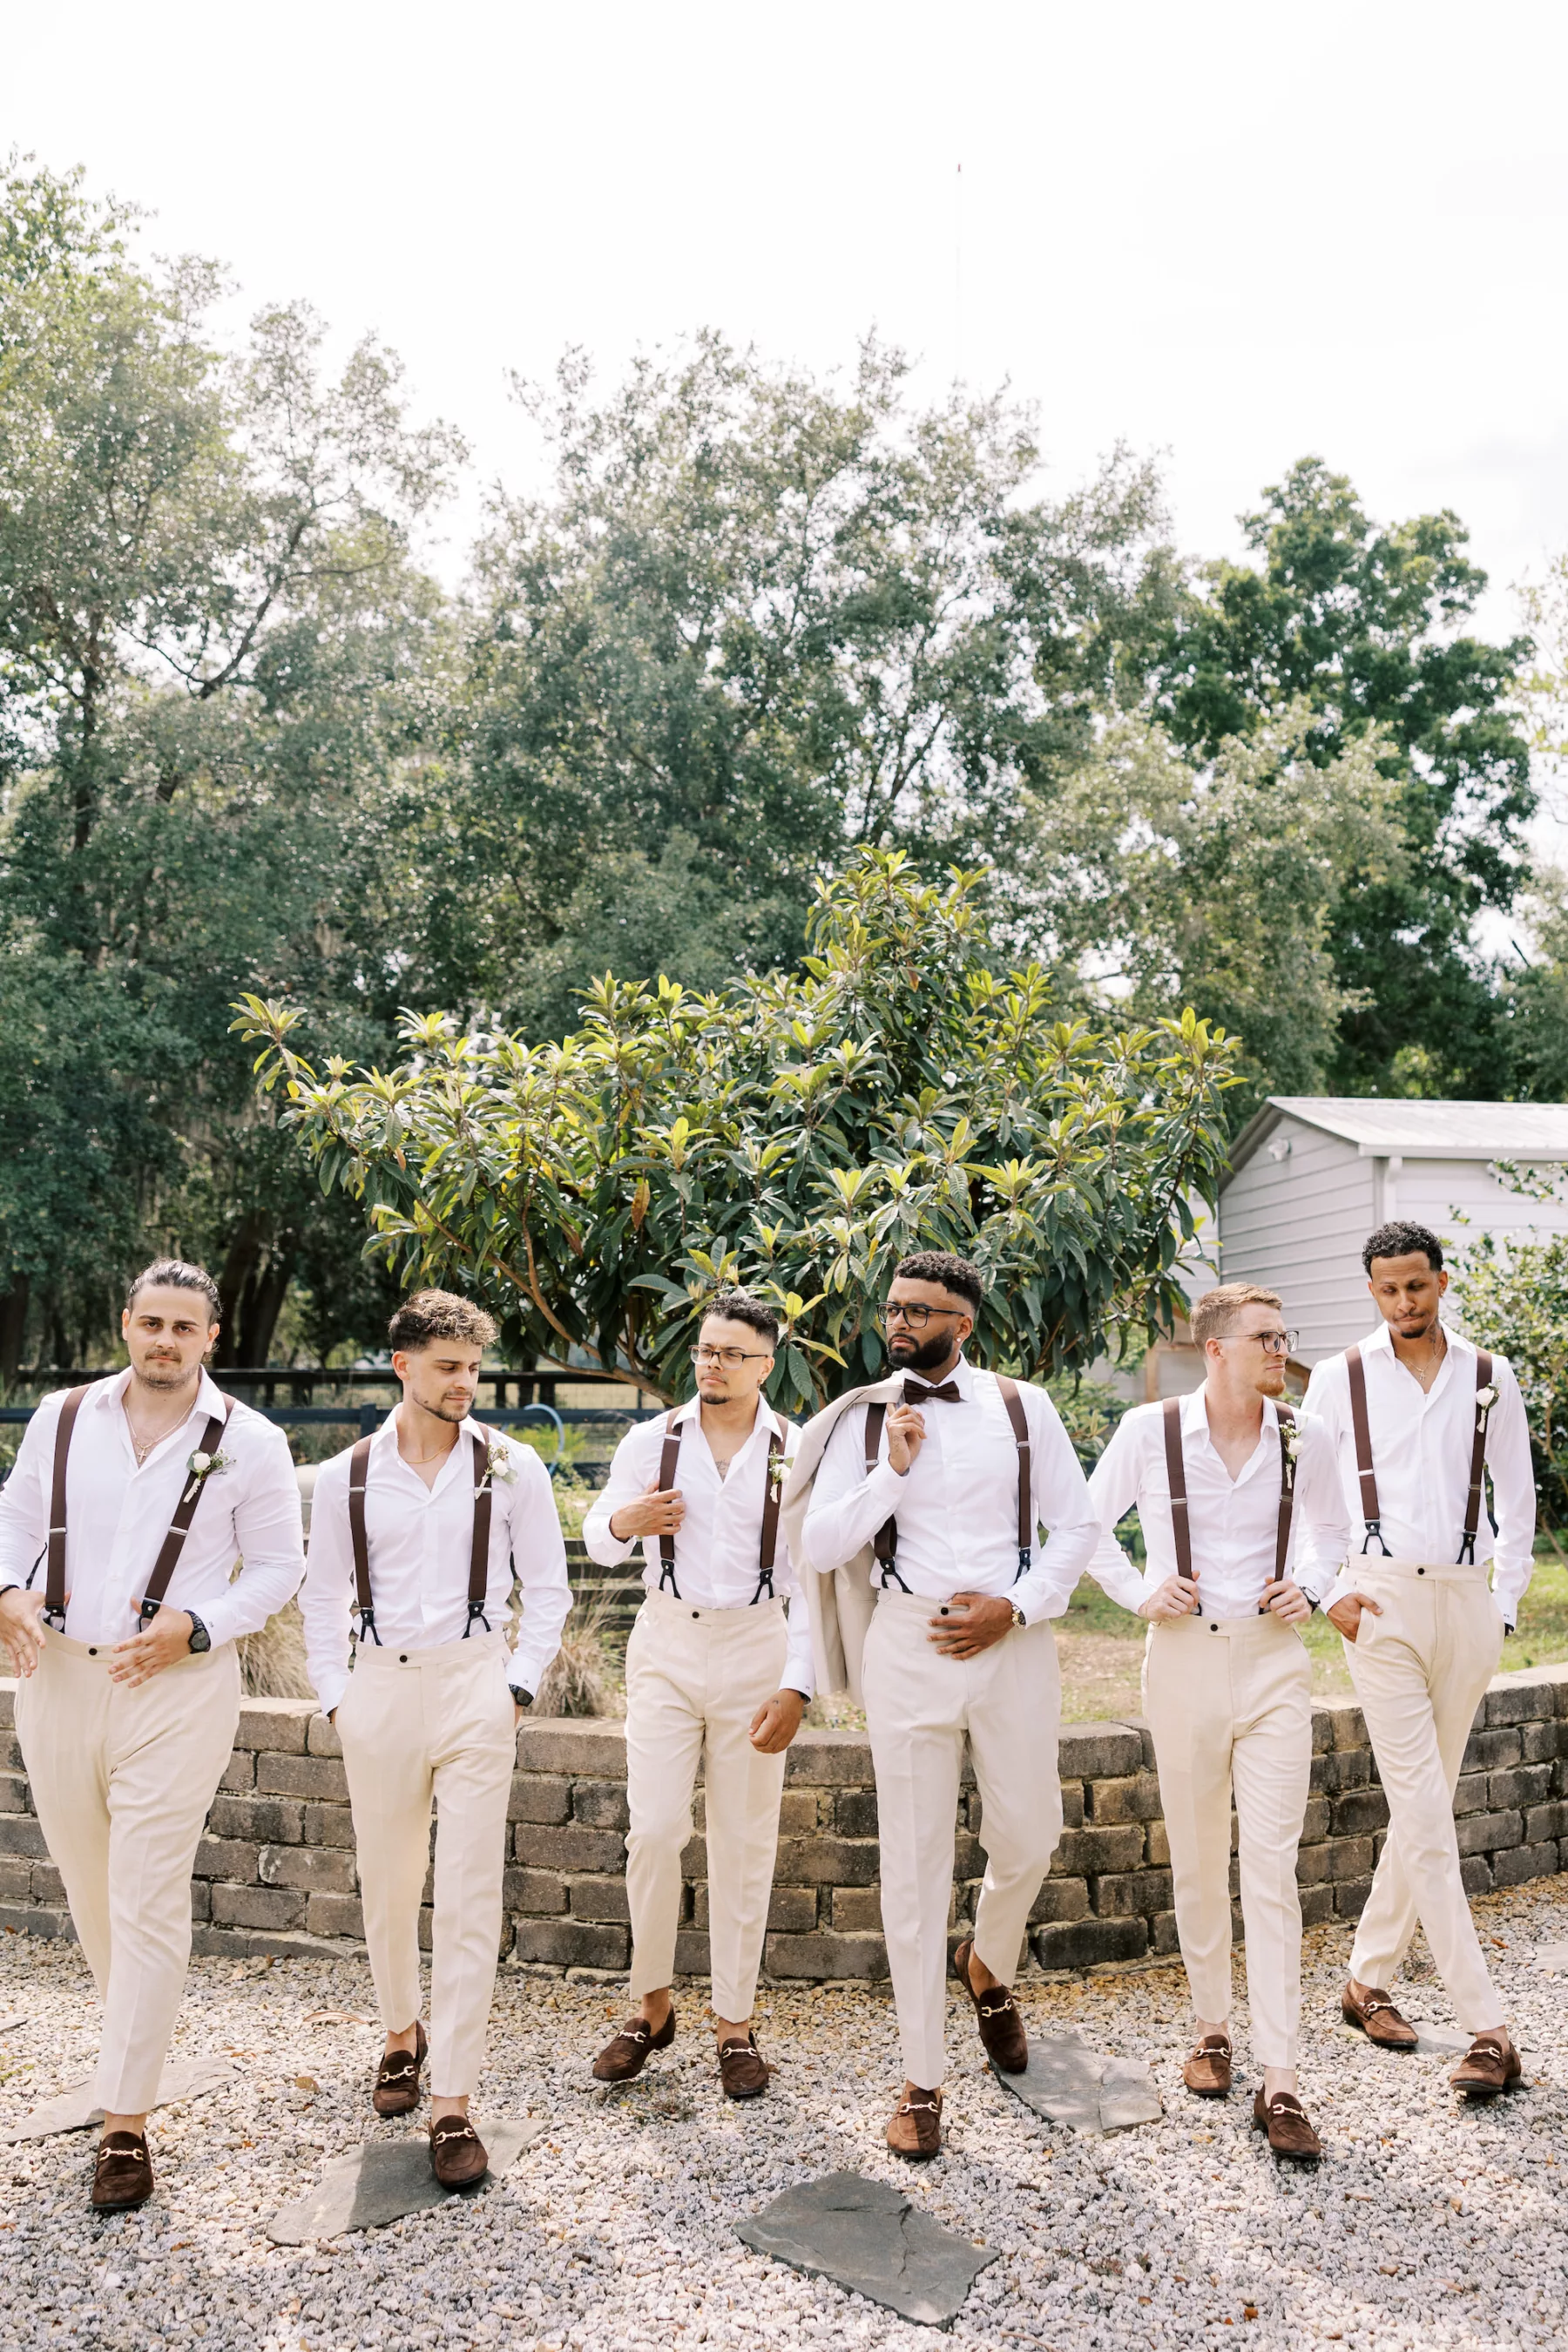 Groomsmen Wedding Day Attire Ideas | Tan Dress Pants with Suspenders